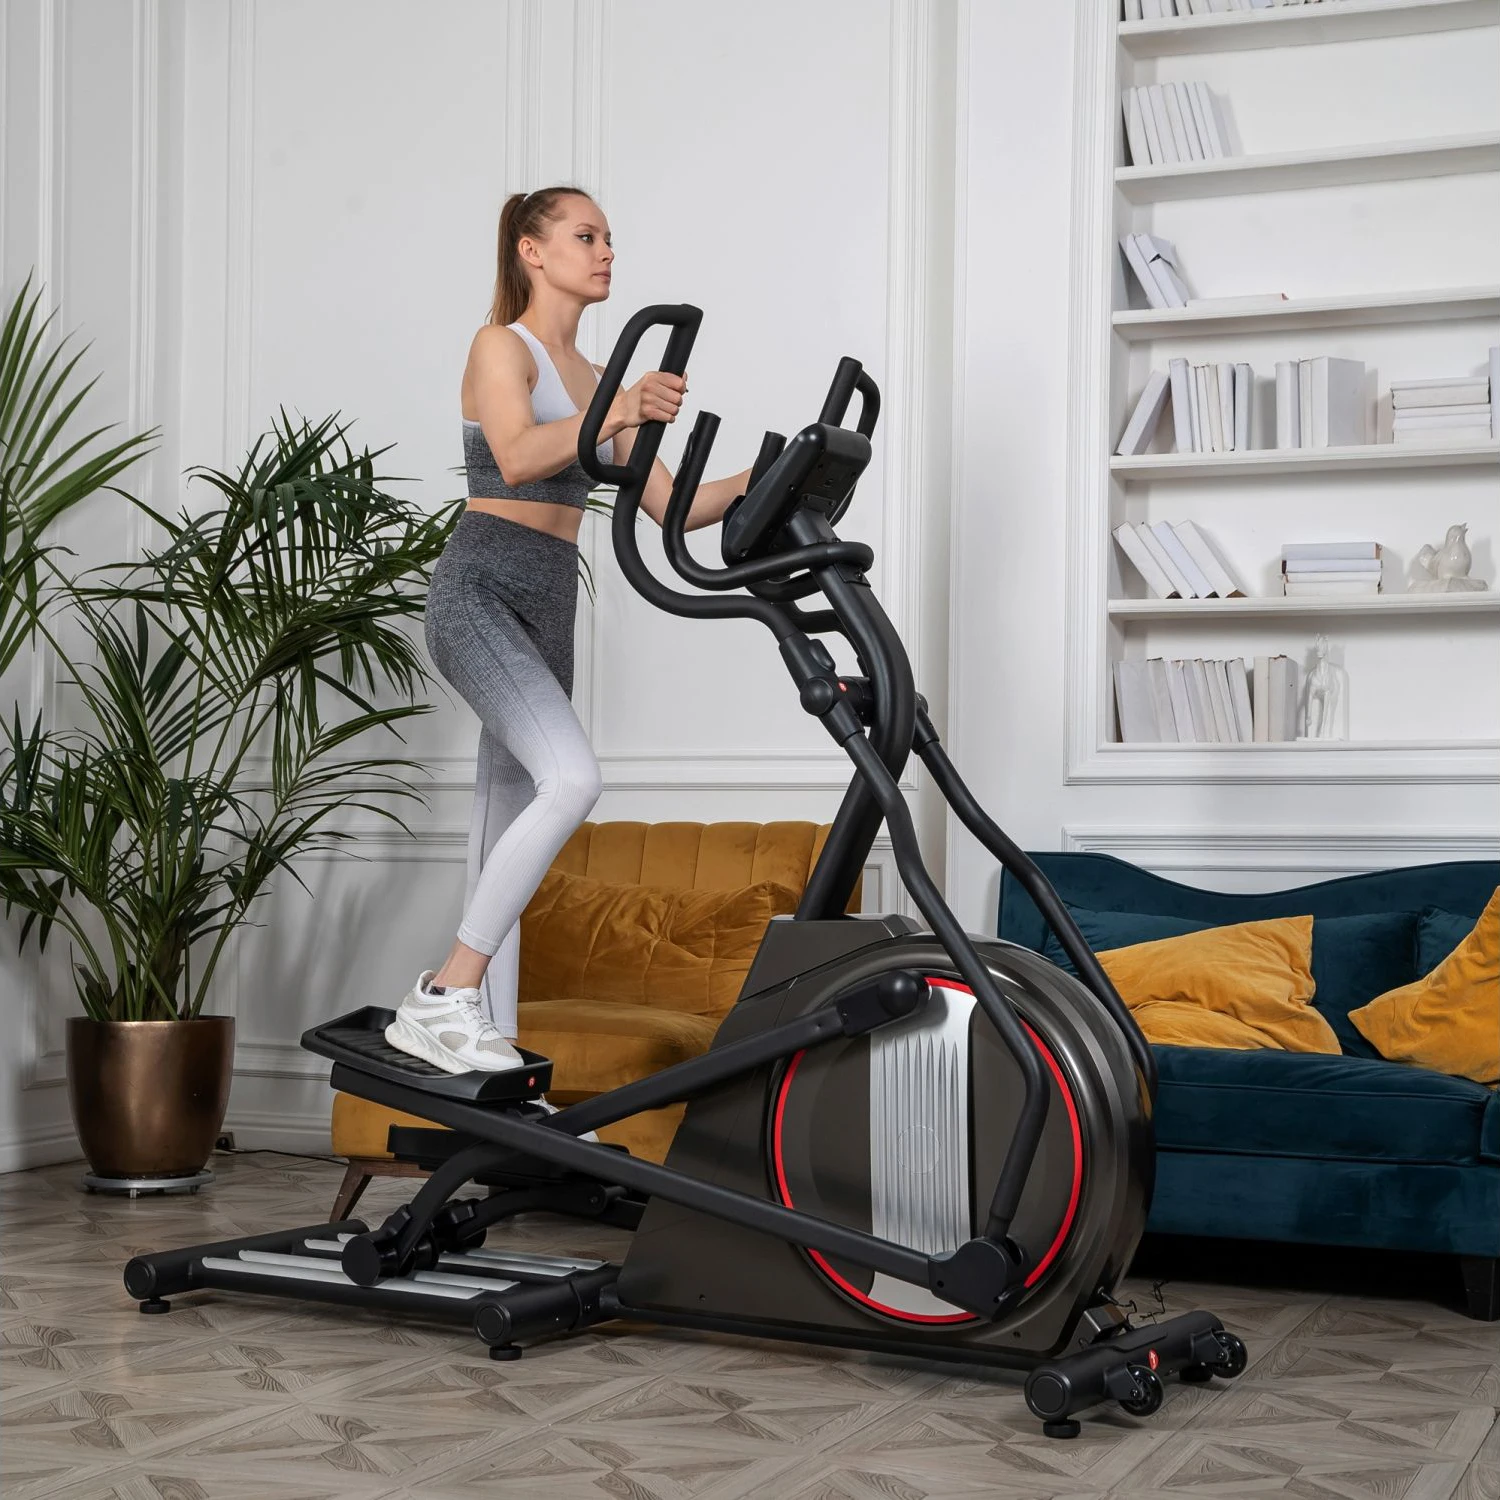 bodybuilding fitness cardio training exercise gym equipment(old) rehabilitation bike sports manufacturers stationary bike